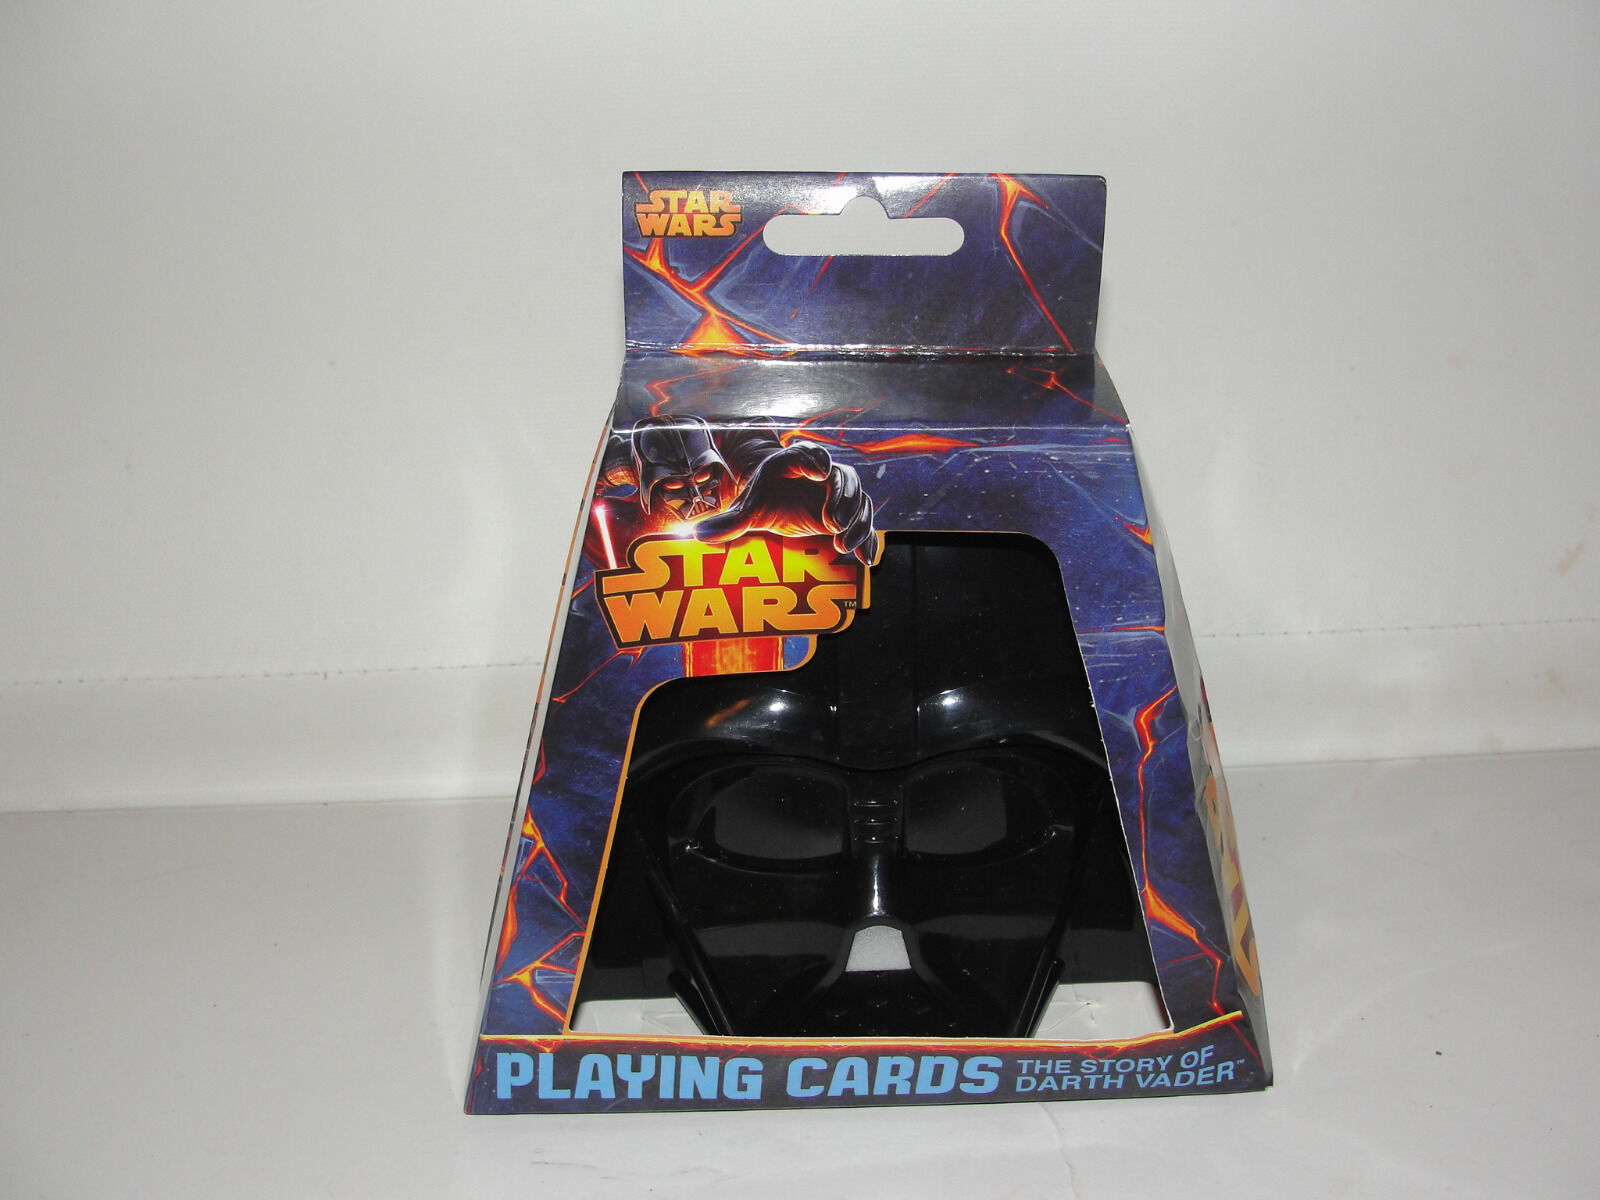 Star Wars Darth Vader Playing Cards In Helmet Case Story Of Darth Vader New